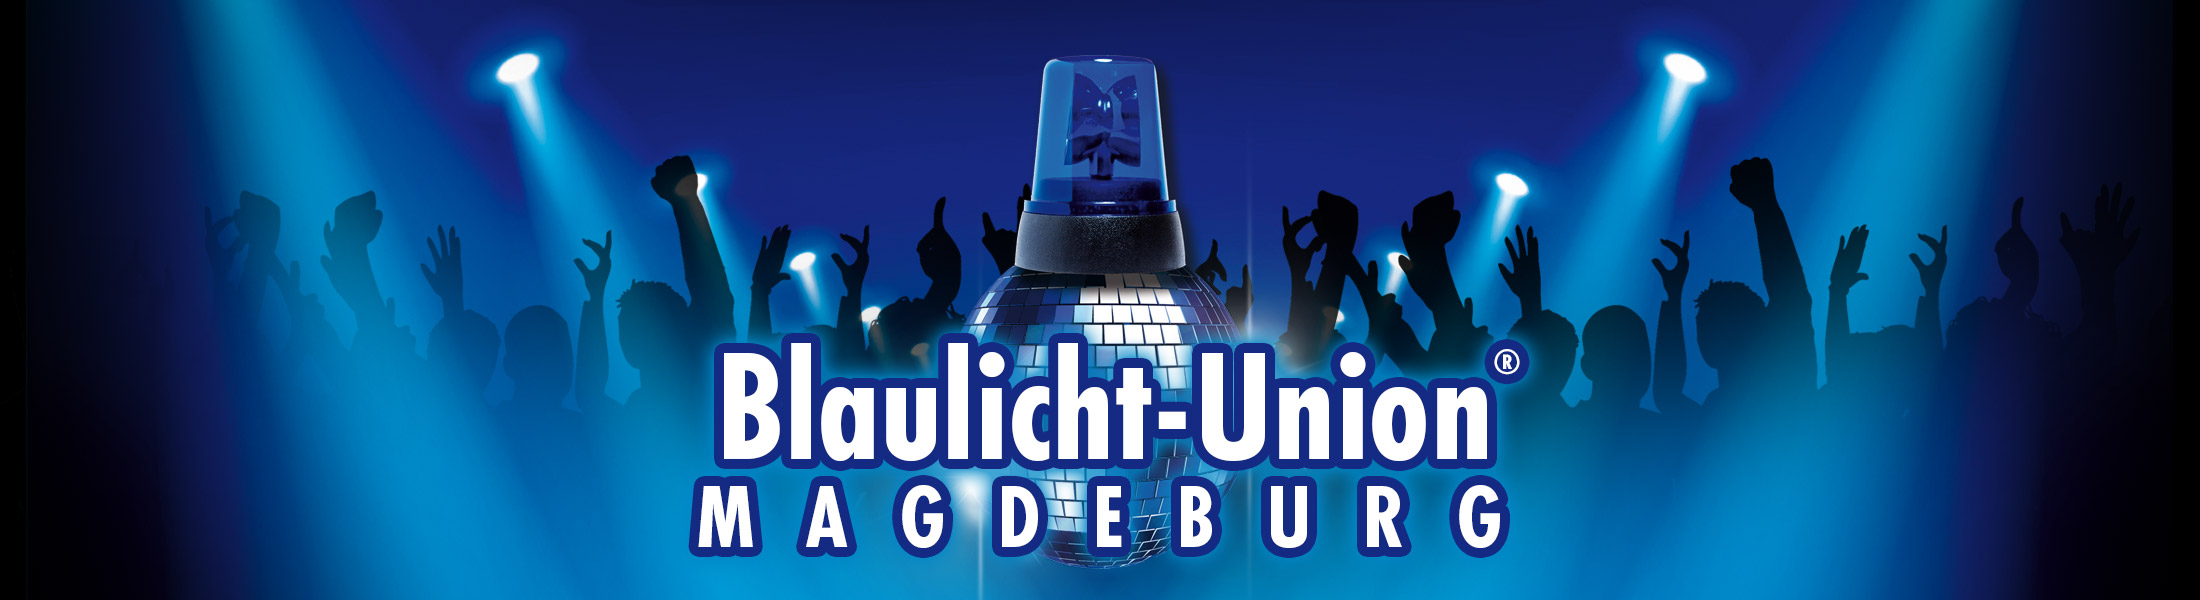 Blaulicht Union Party® Magdeburg